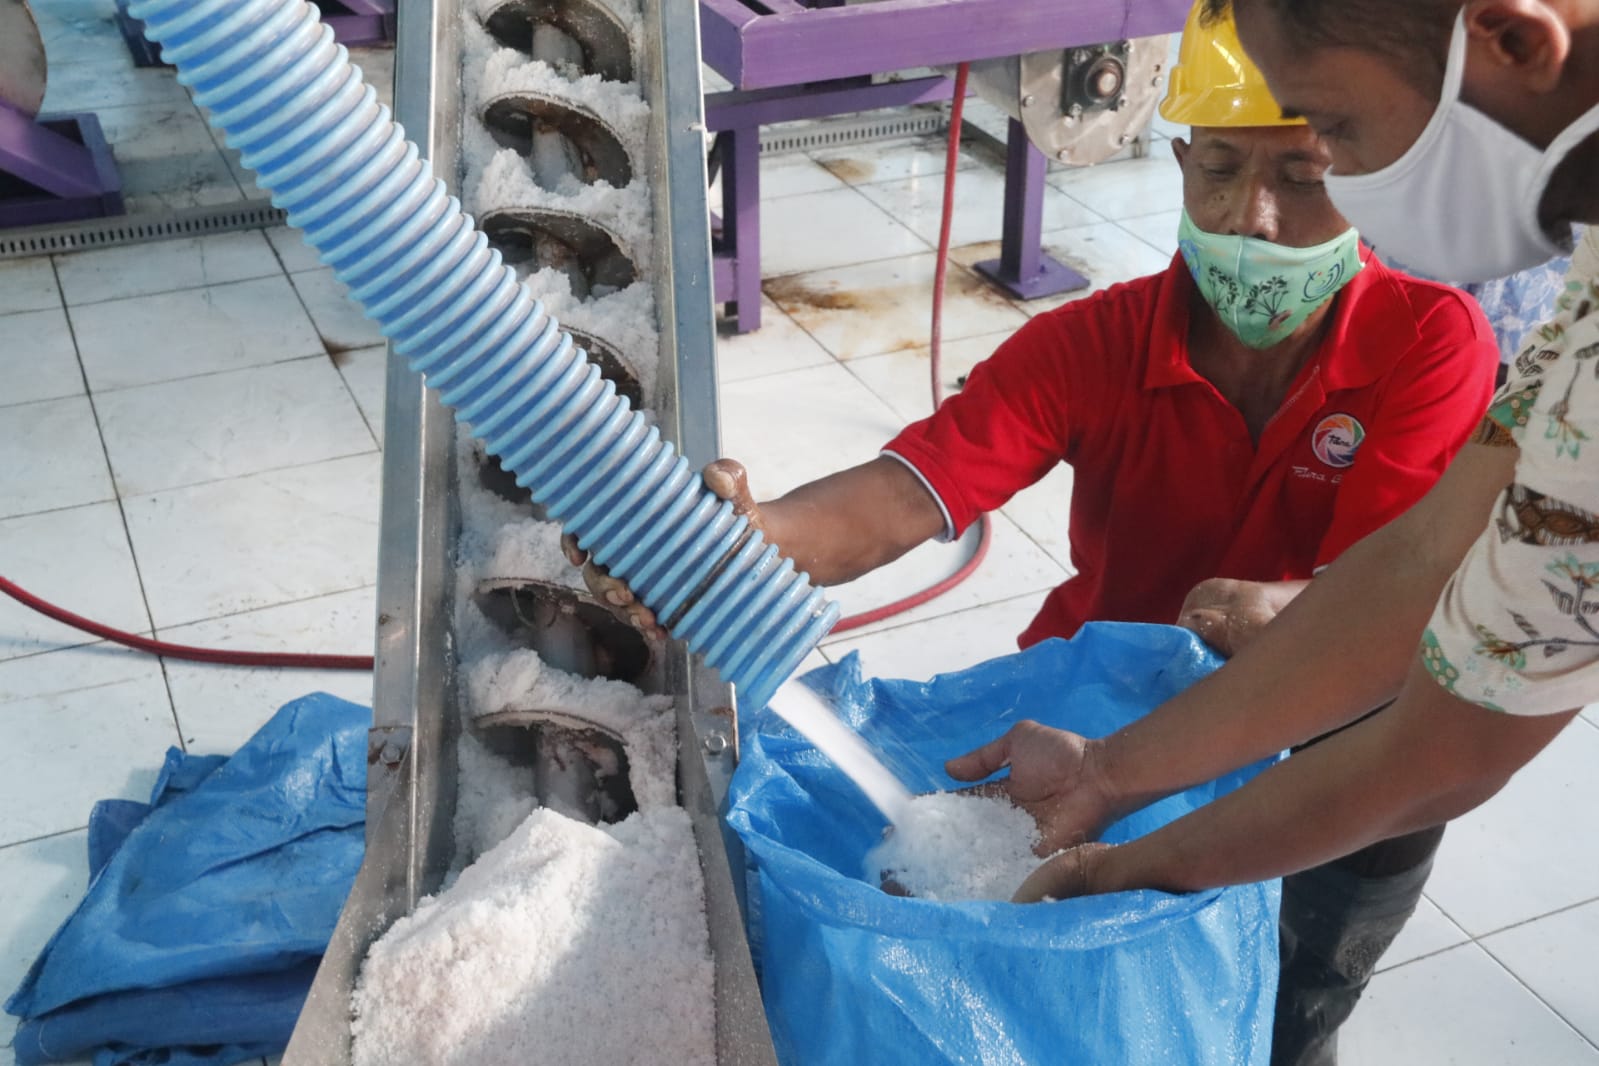 Peresmian Washing Plant dan Dialog Dengan Petambak Garam di Brebes, Selasa (22/12)